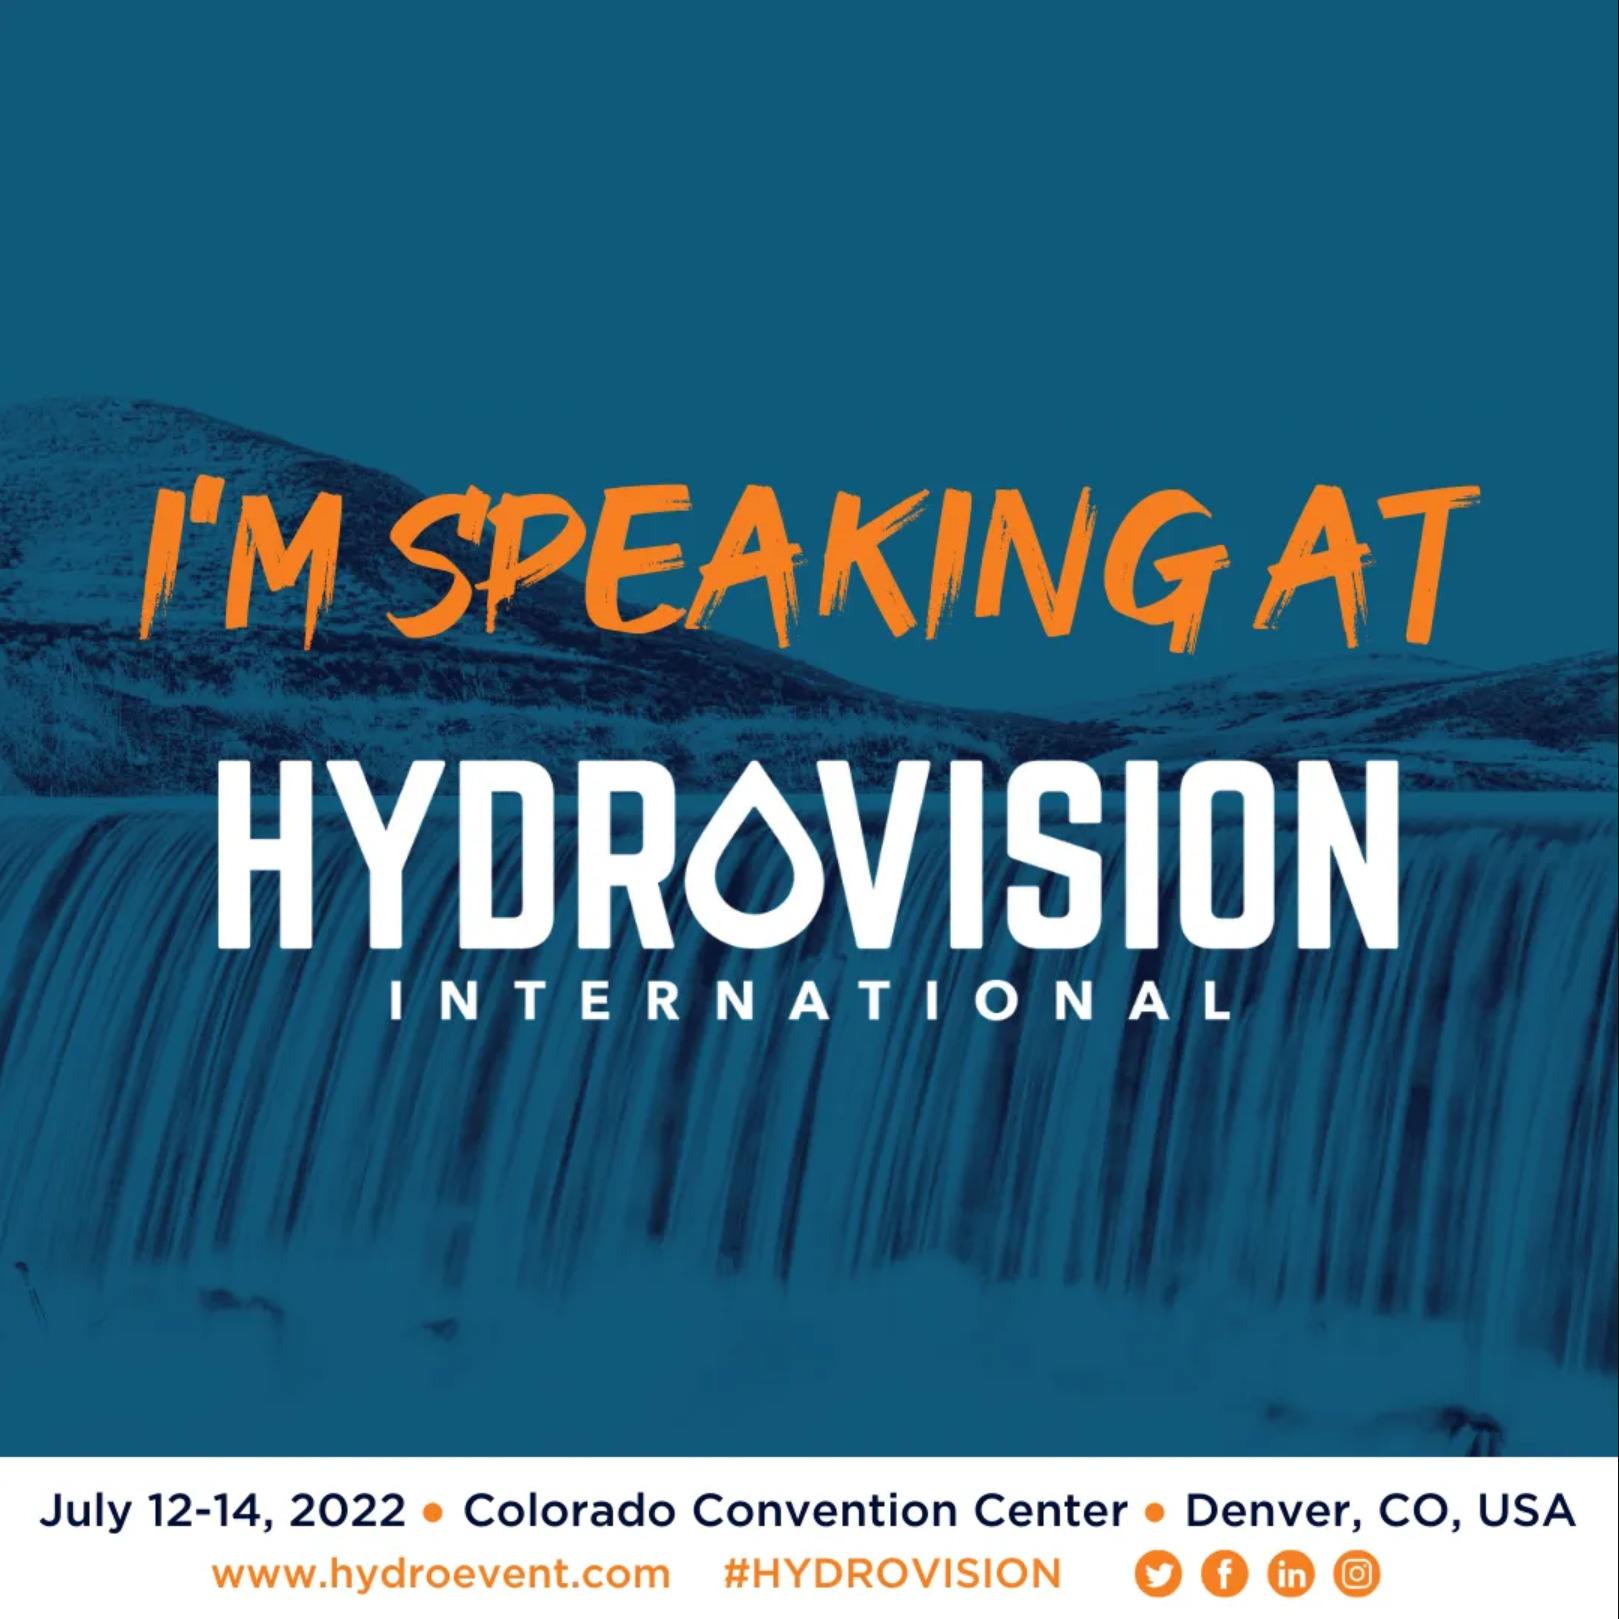 im speaking at hydrovision